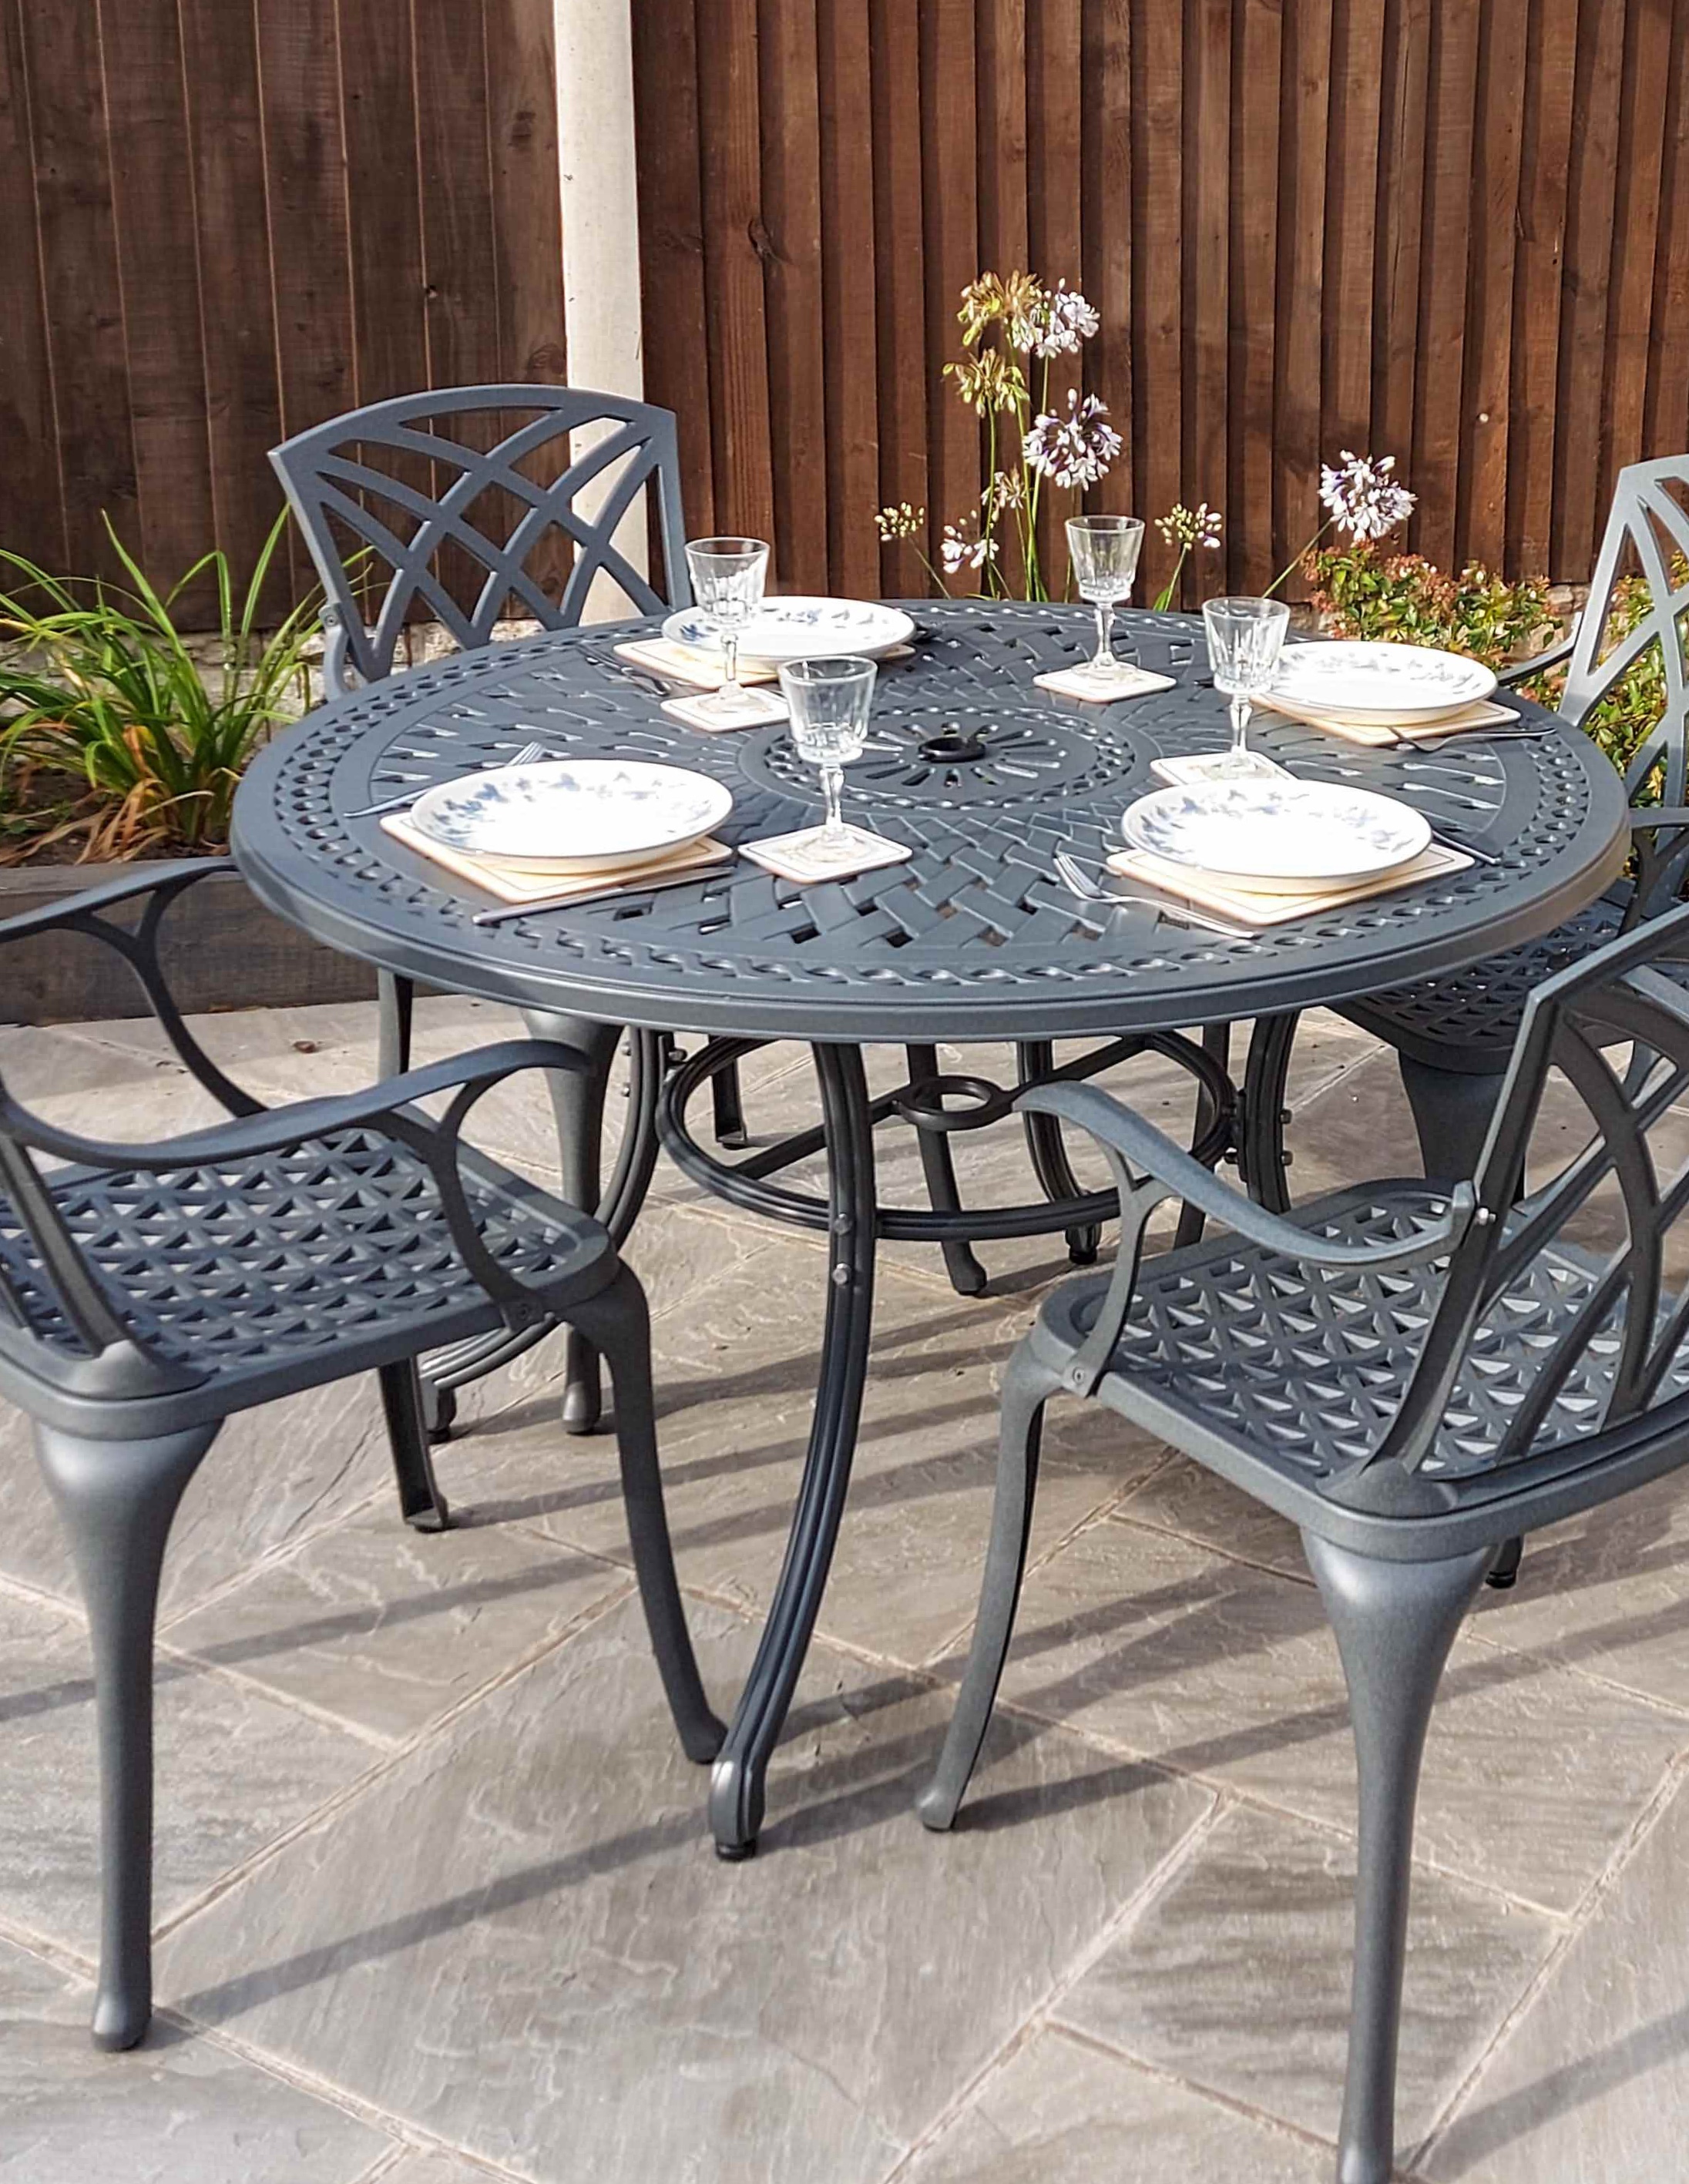 Alice 4-Seater Garden Table Set in Slate Grey